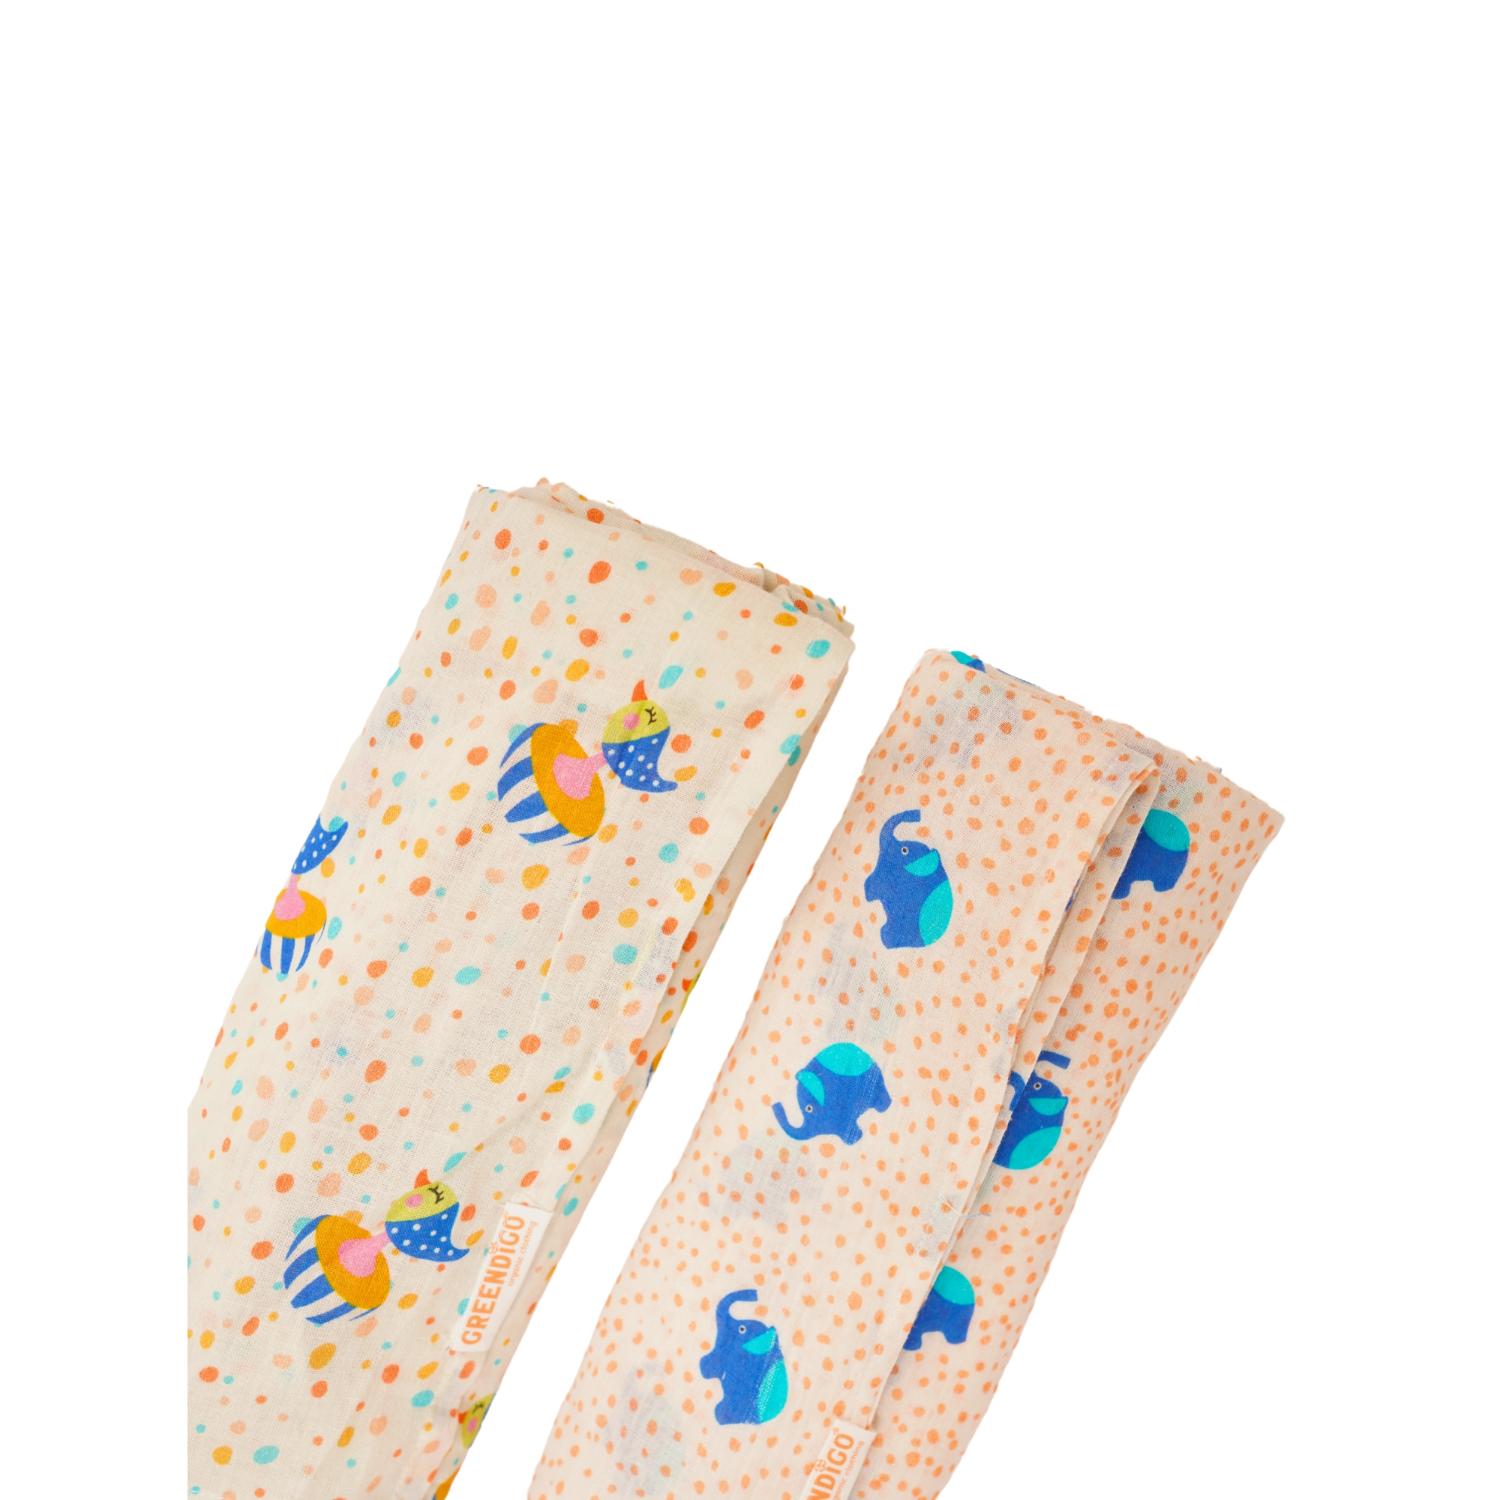 Greendigo Cotton Muslin Swaddle Wrap for New Born 100 x 100 cm, (Pack of 2) - Multicolor